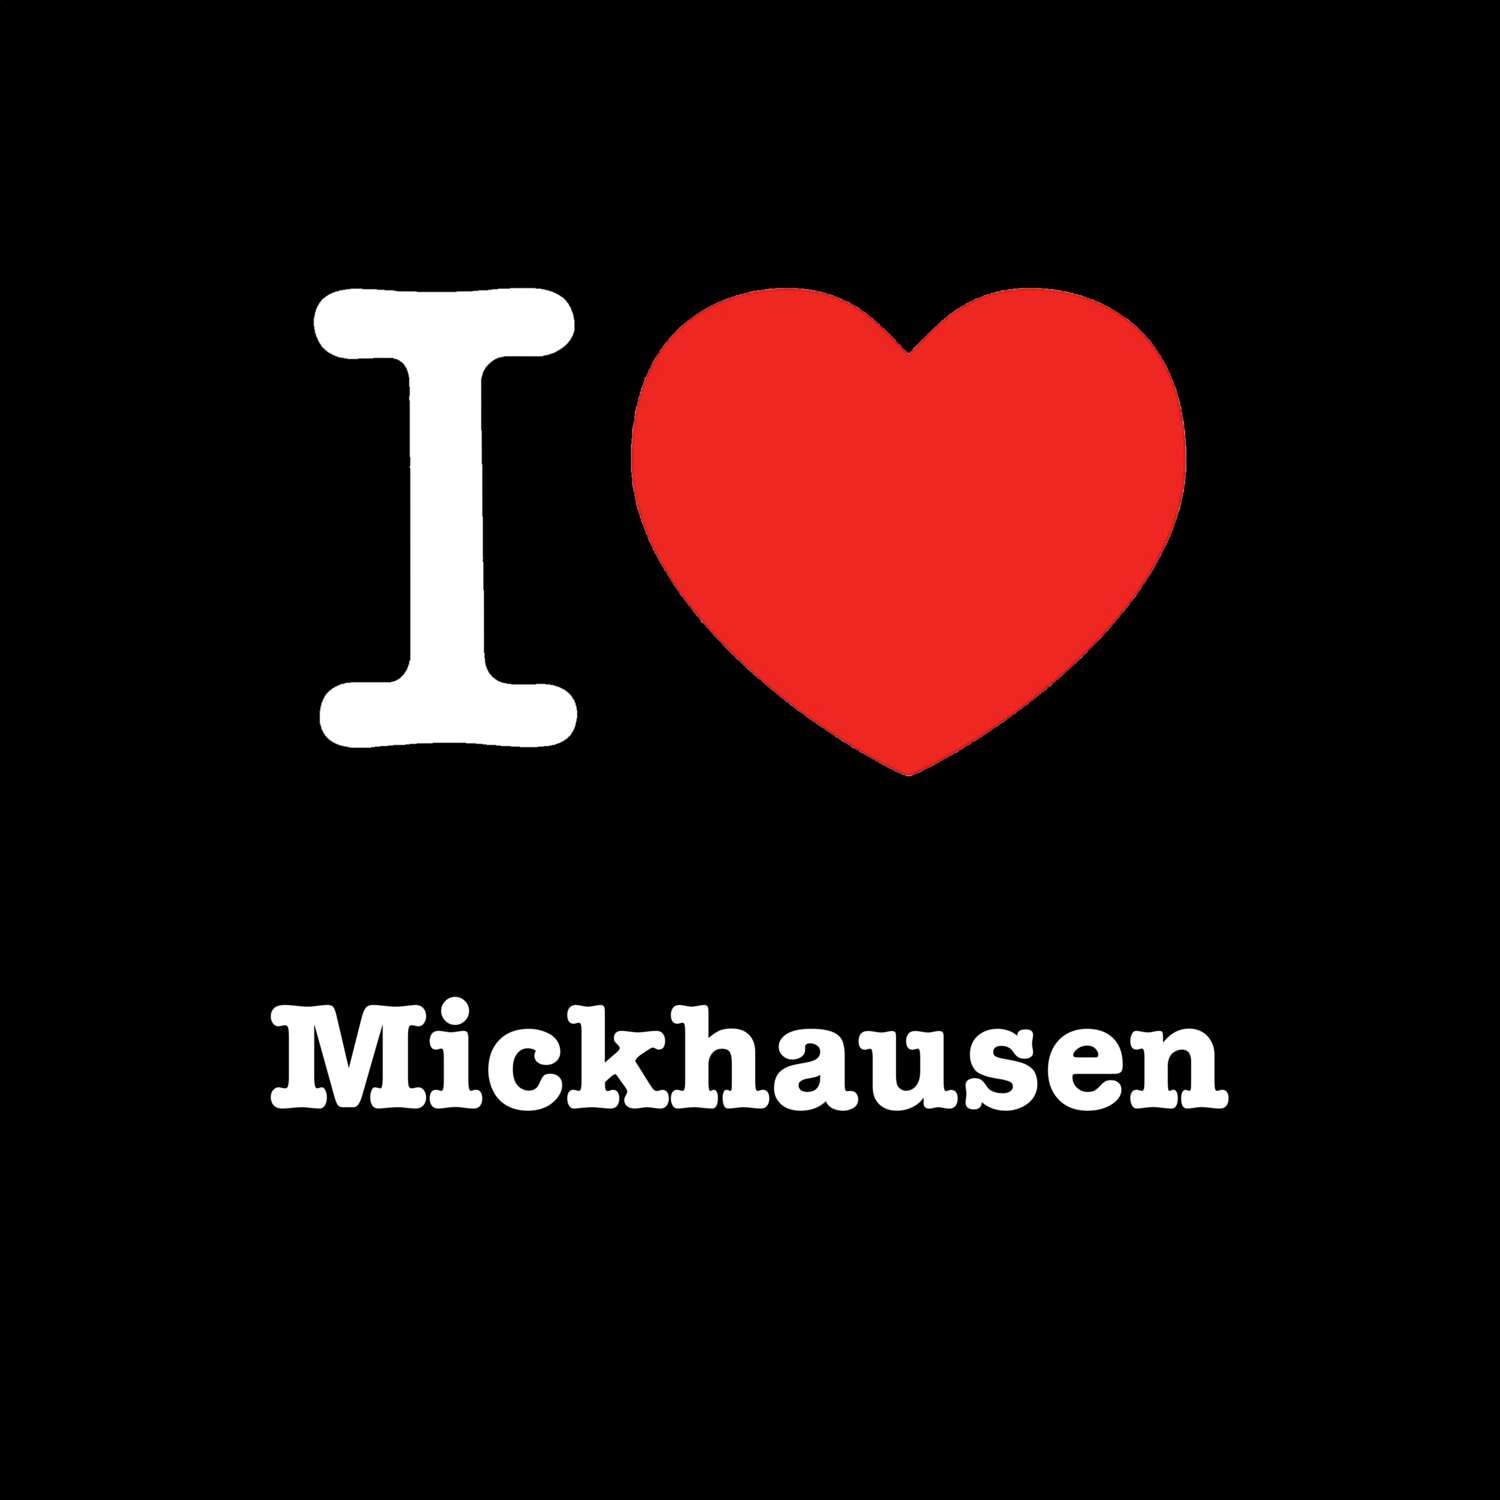 Mickhausen T-Shirt »I love«